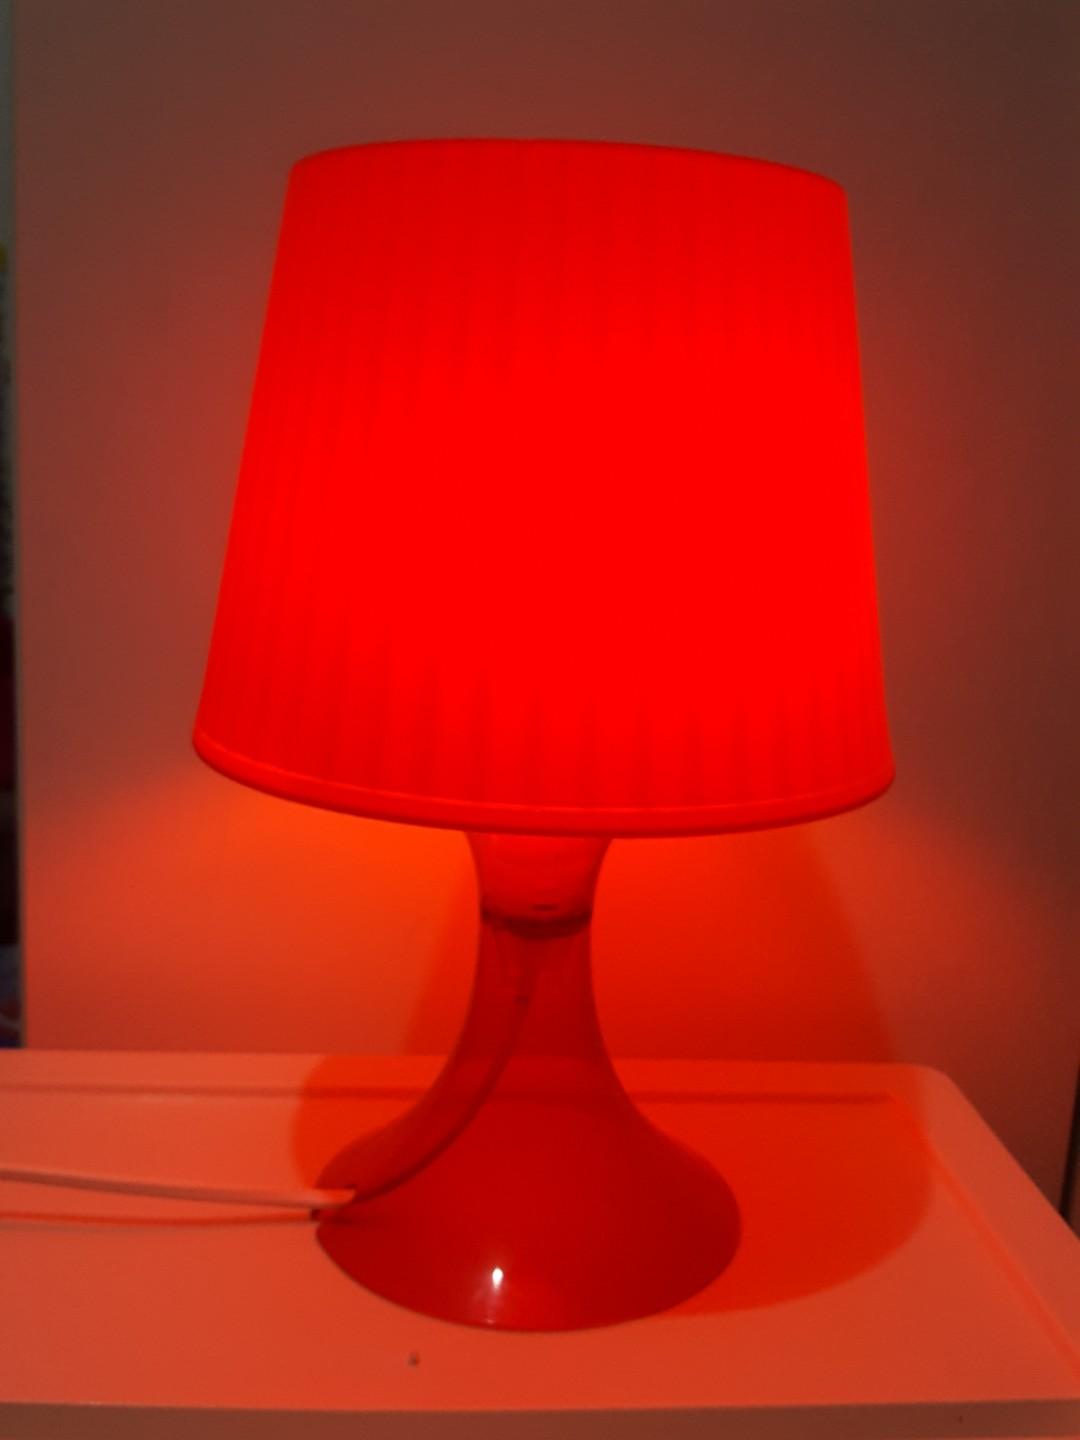 Ikea Red Table Lamp Furniture Home Decor Lighting